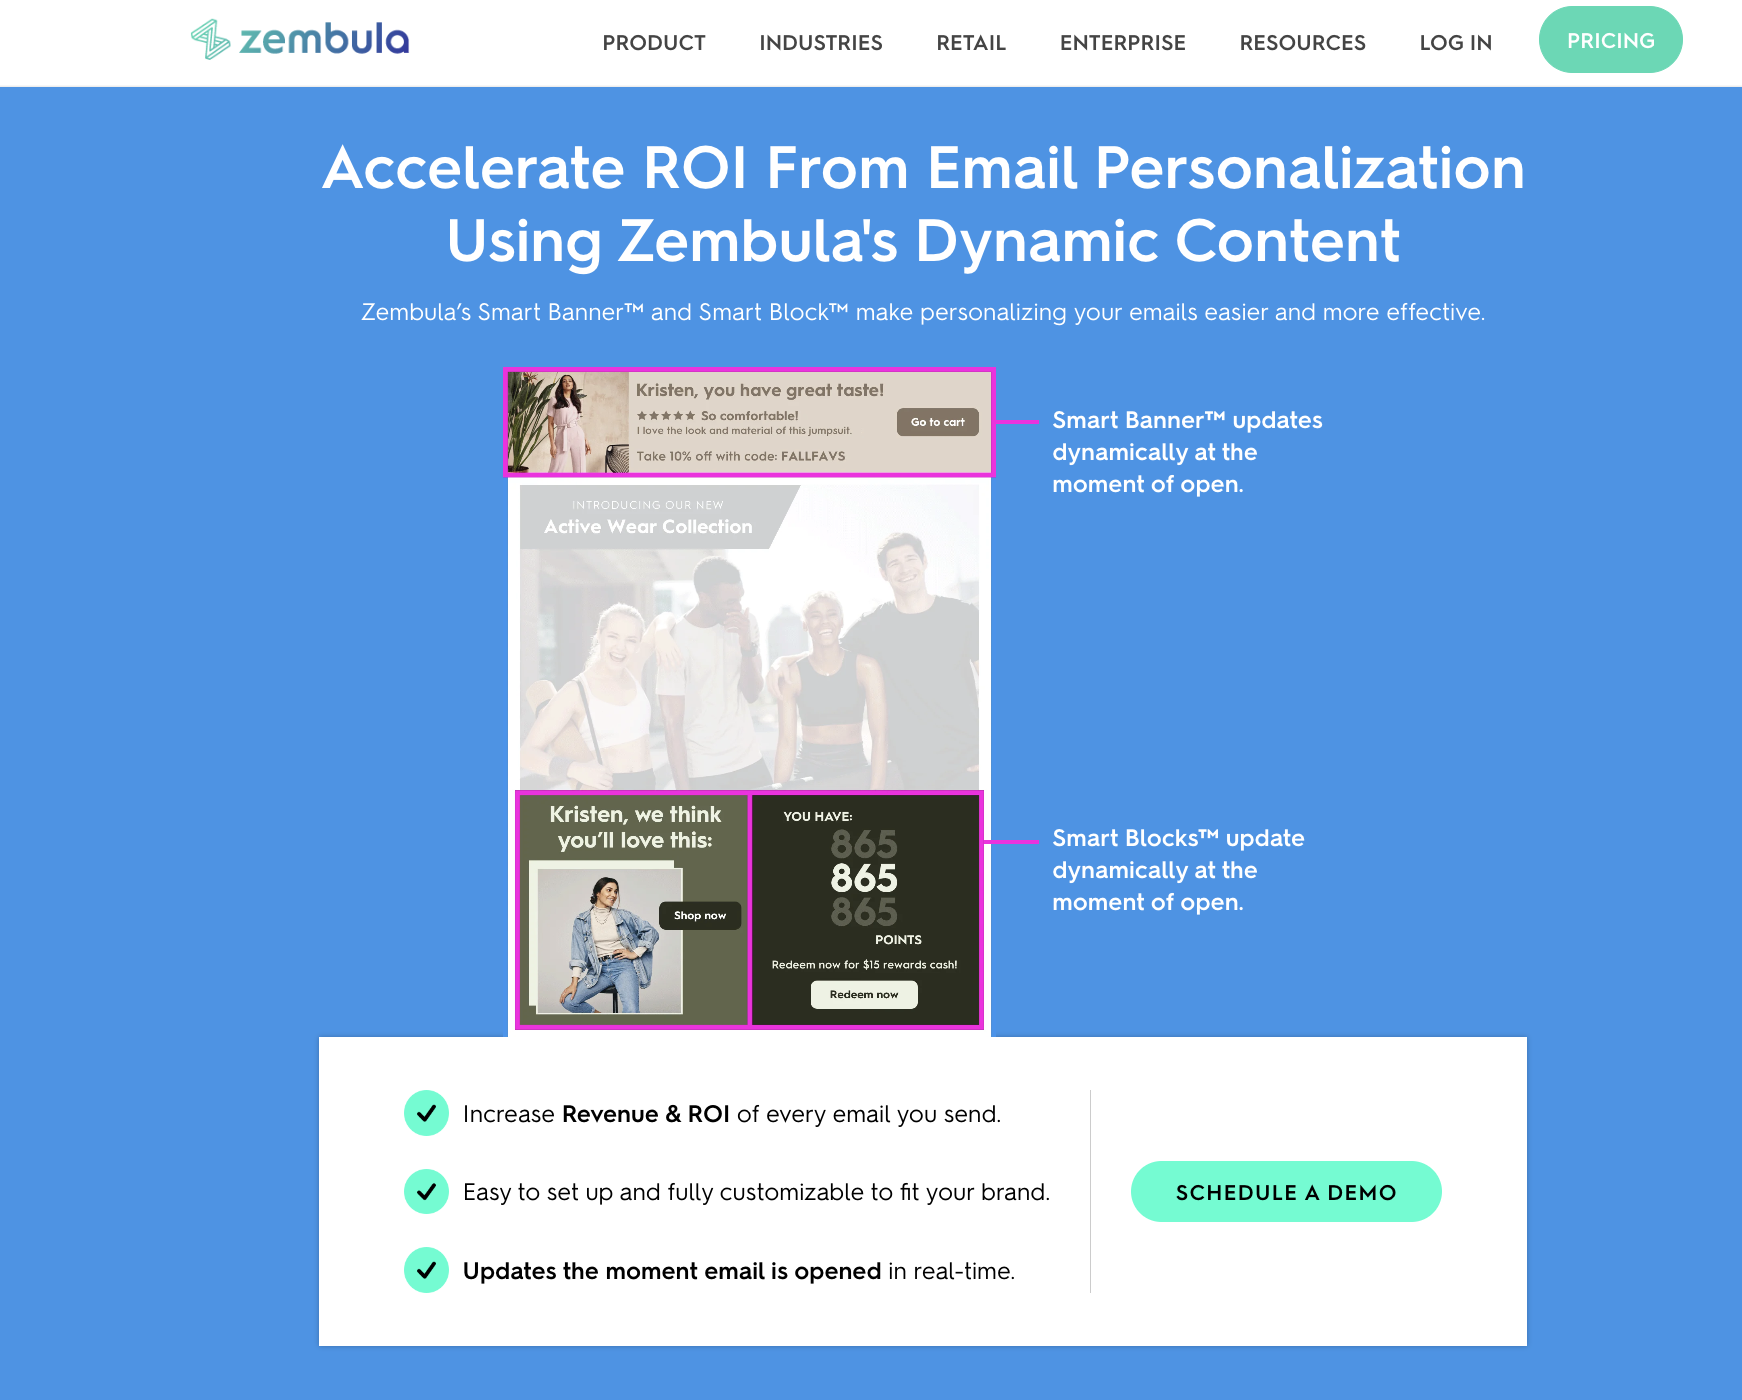 zembula email personalization tools